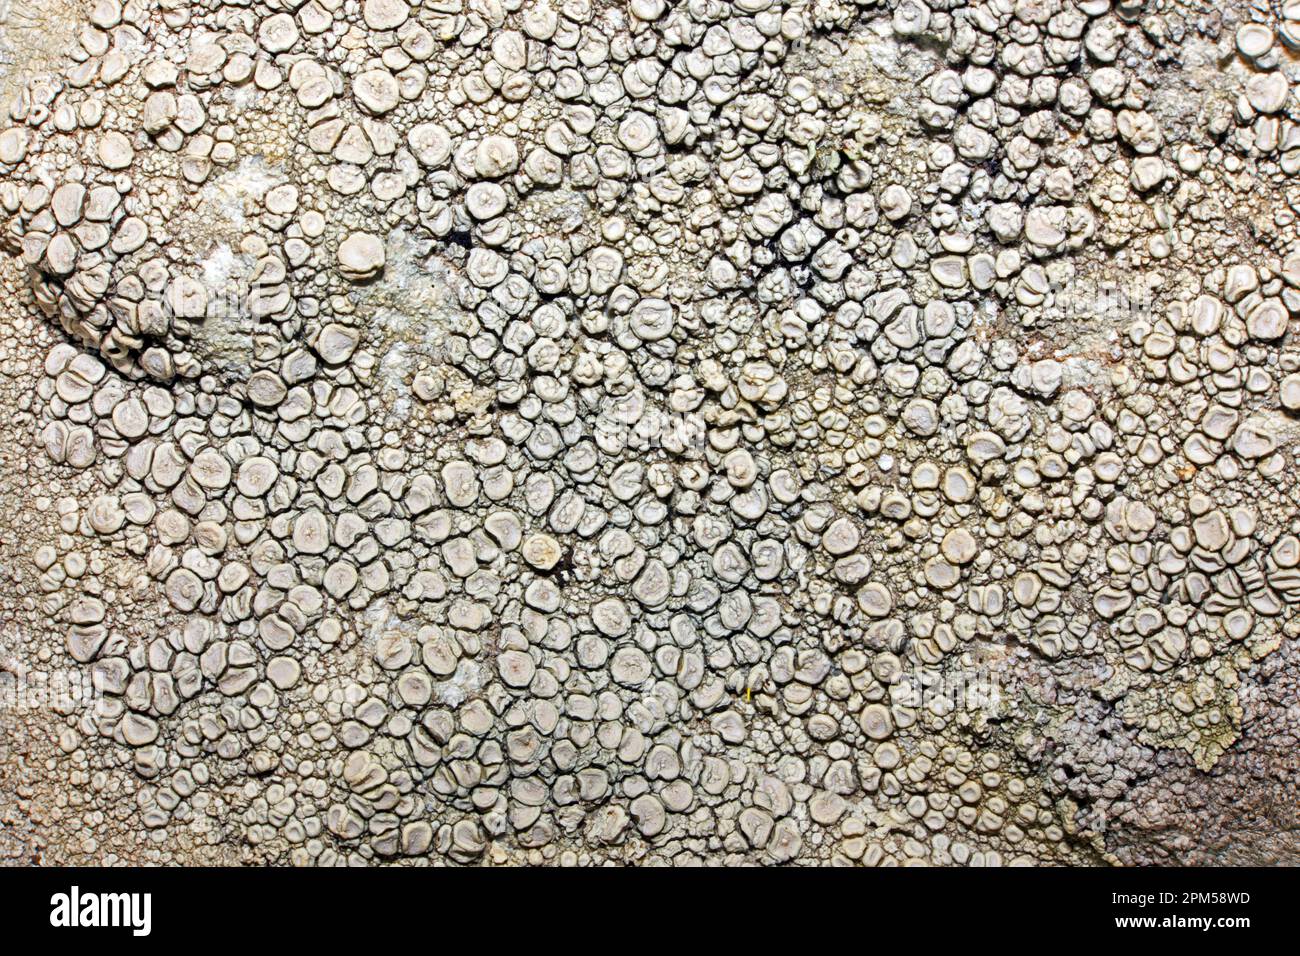 Ochrolechia parella (crab-eye lichen) is a crustose lichen often found on coastal rocks. It is found in both northern and southern hemispheres. Stock Photo